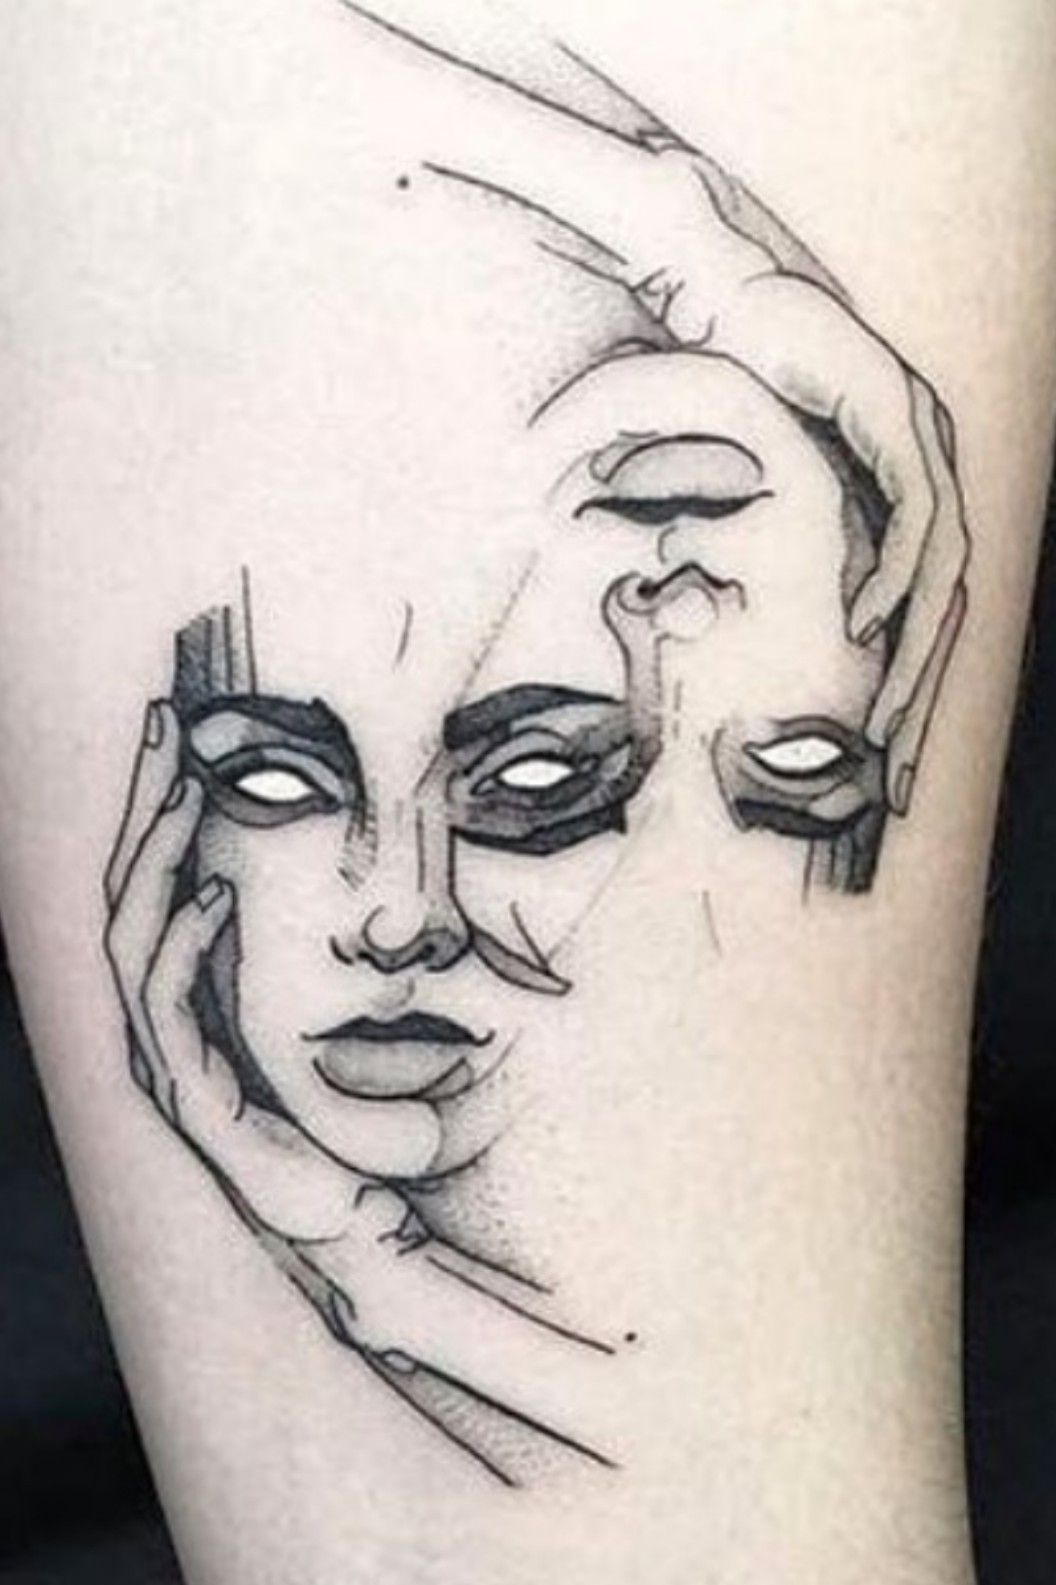 Pin on Tattoos and tattoo ideas